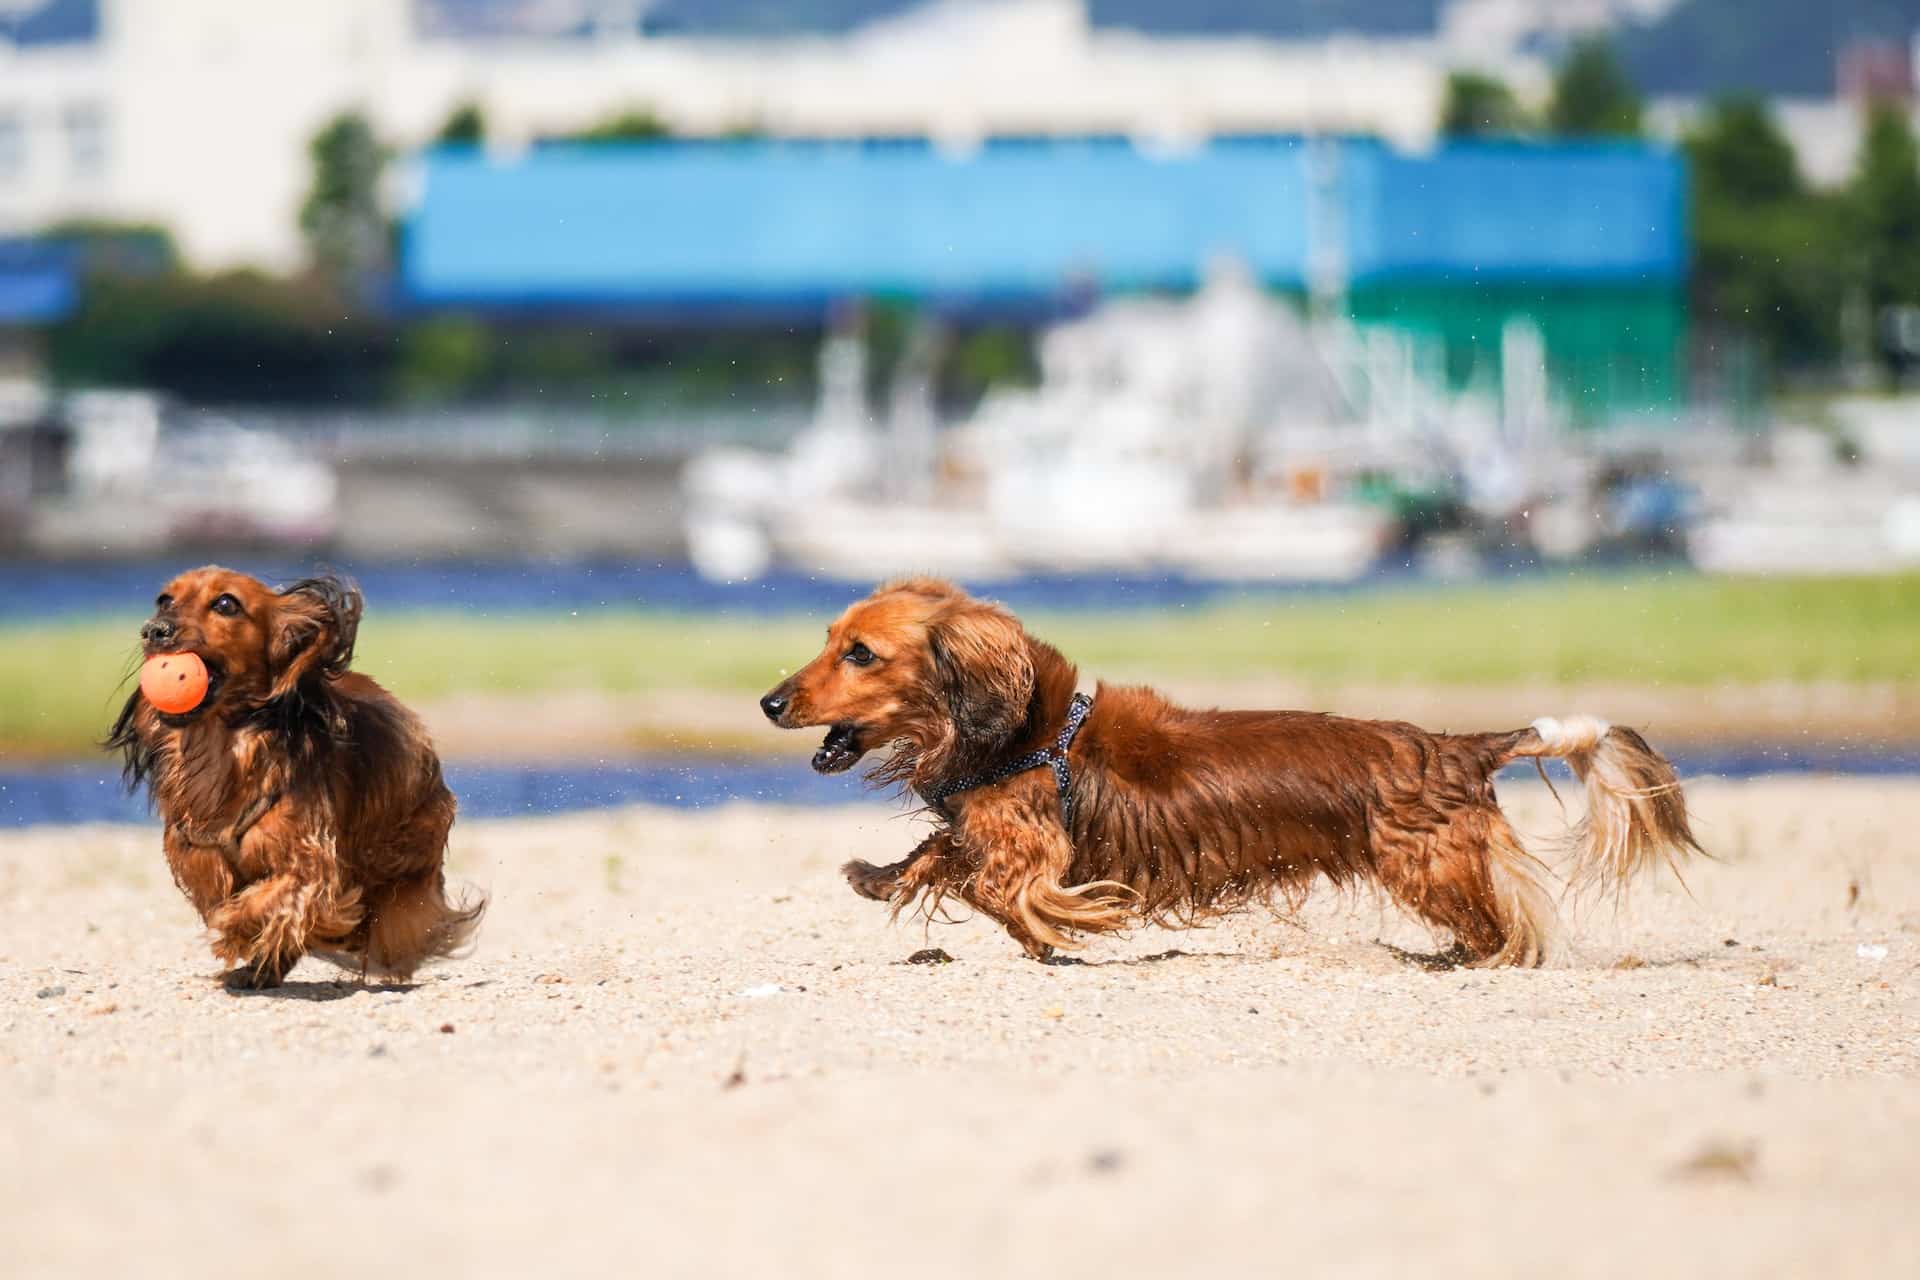 Two dachshunds running on a sandy dog beach in Orange County, California, USA